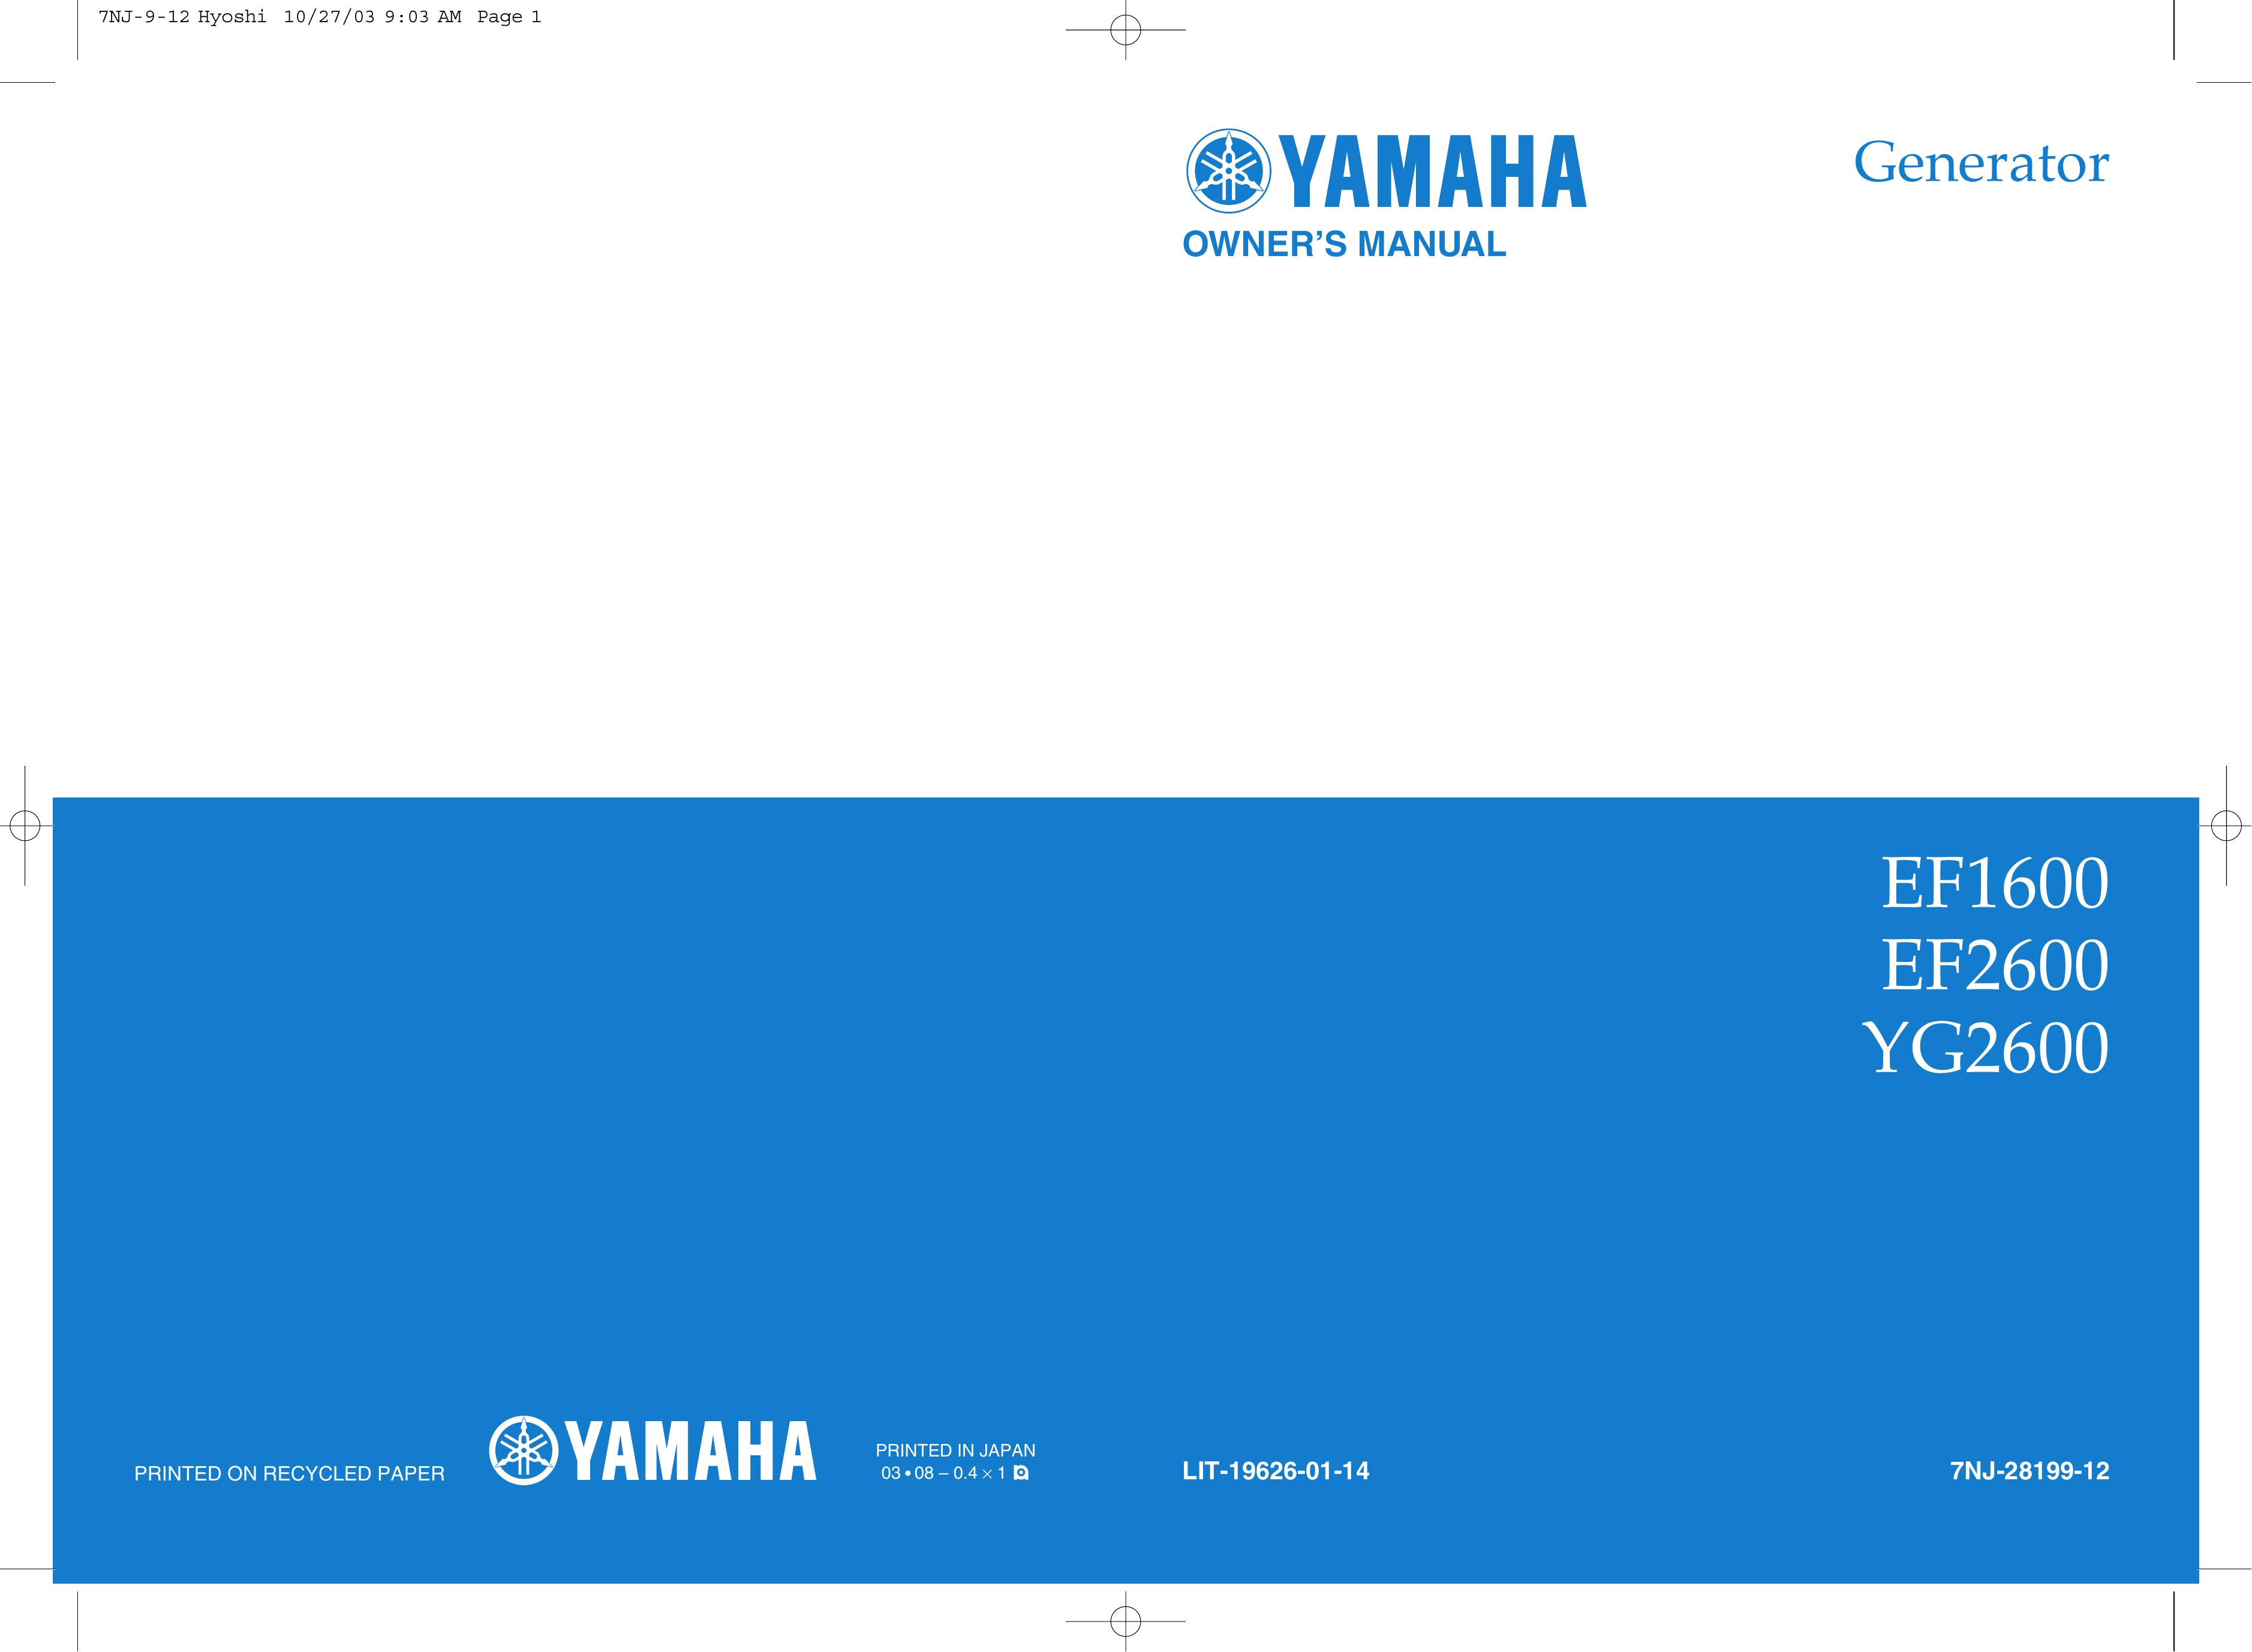 Yamaha EF1600, EF2600, YG2600 Portable Generator User Manual